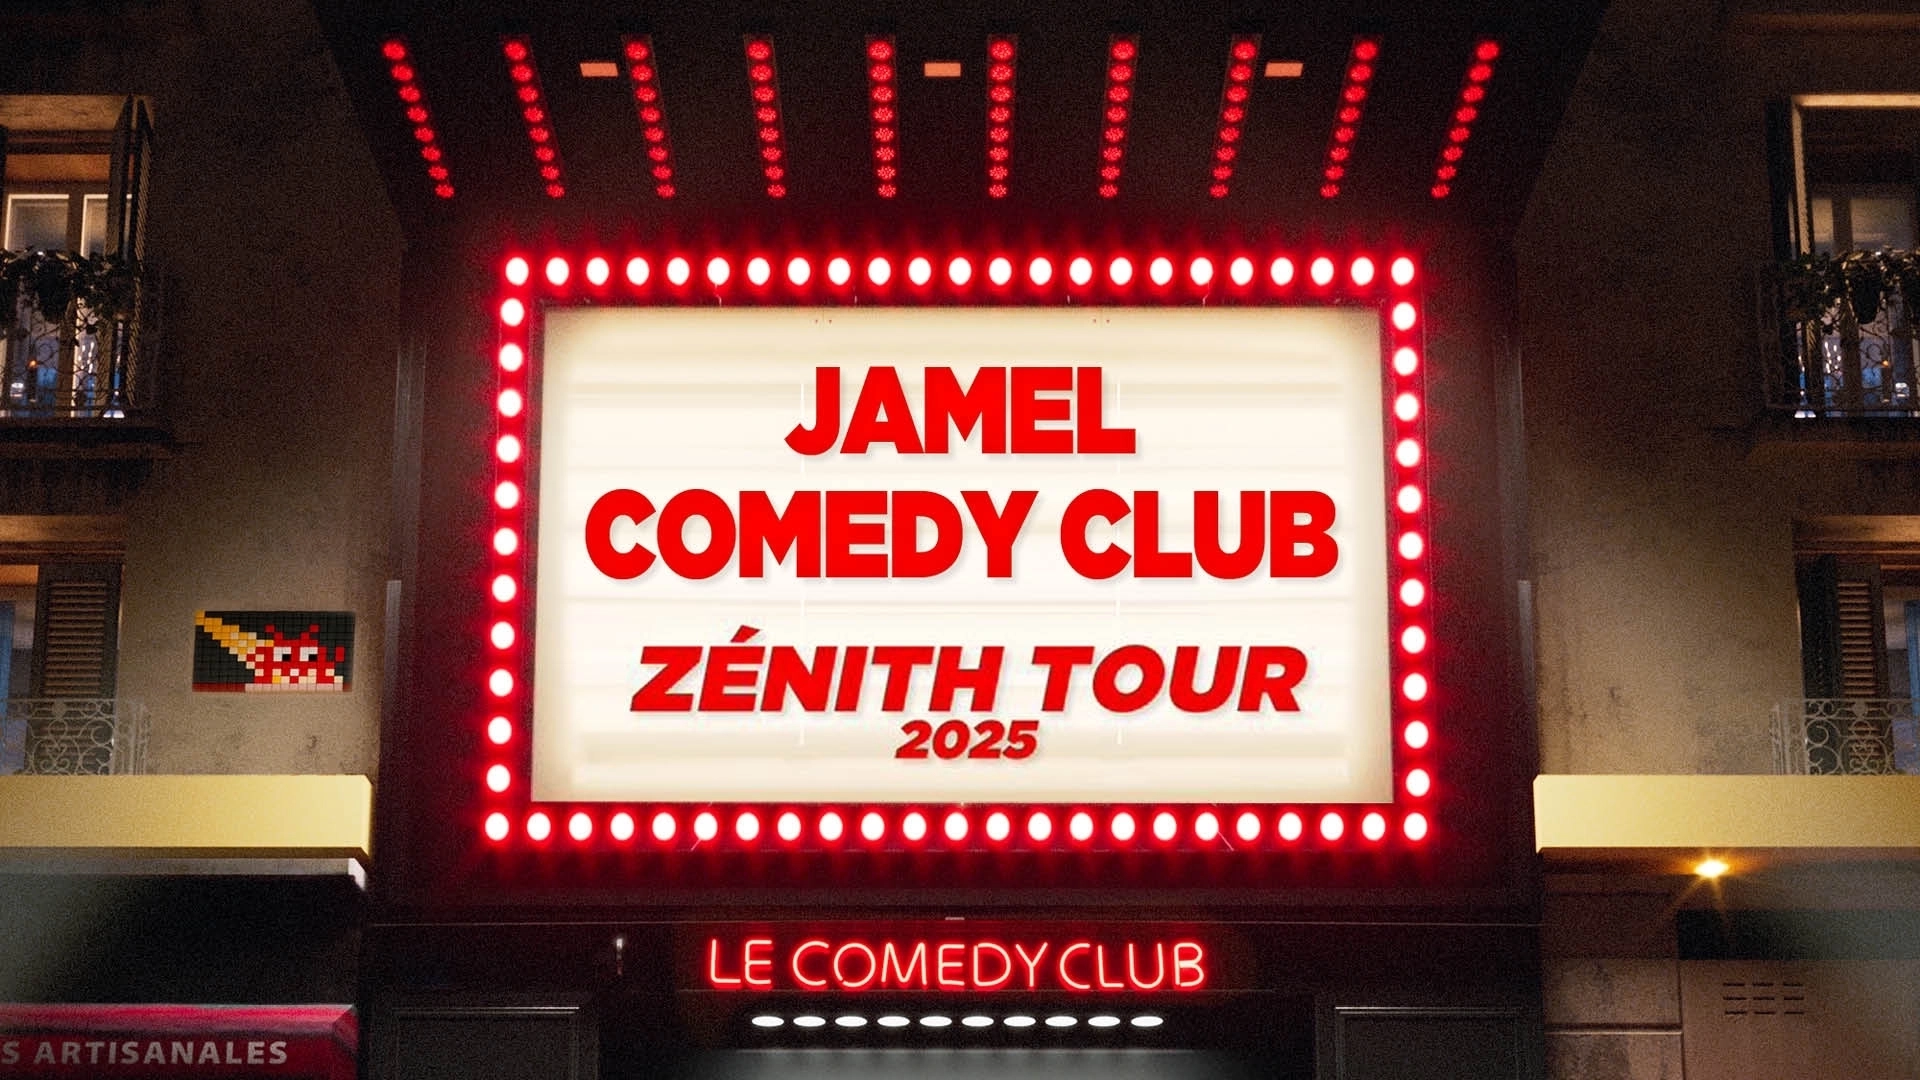 Jamel Comedy Club Zenith Tour 2025 al Halle Tony Garnier Tickets